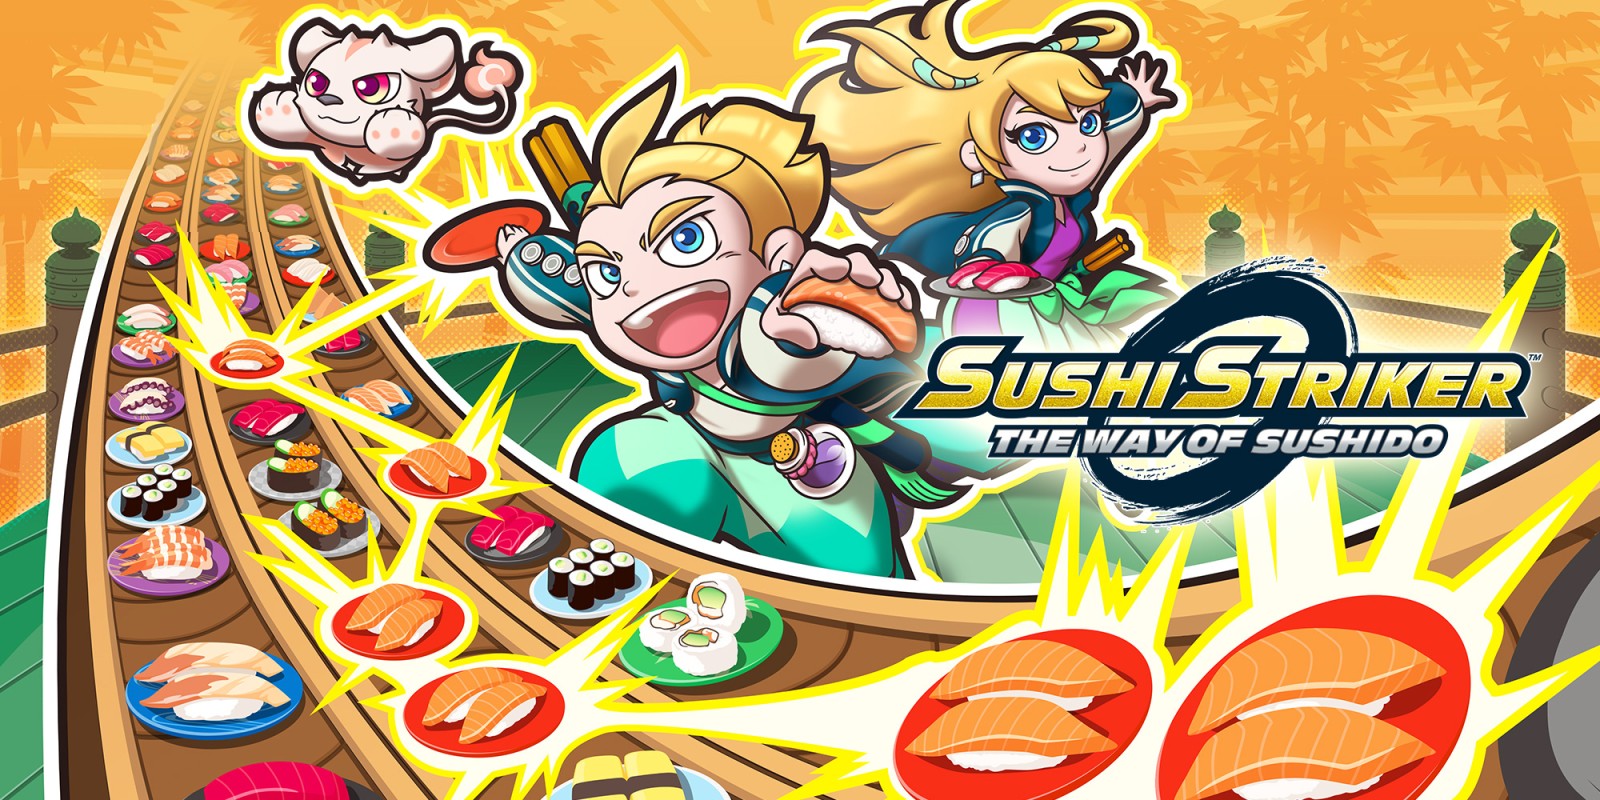 Sushi%20Striker%20The%20Way%20of%20Sushido.jpg